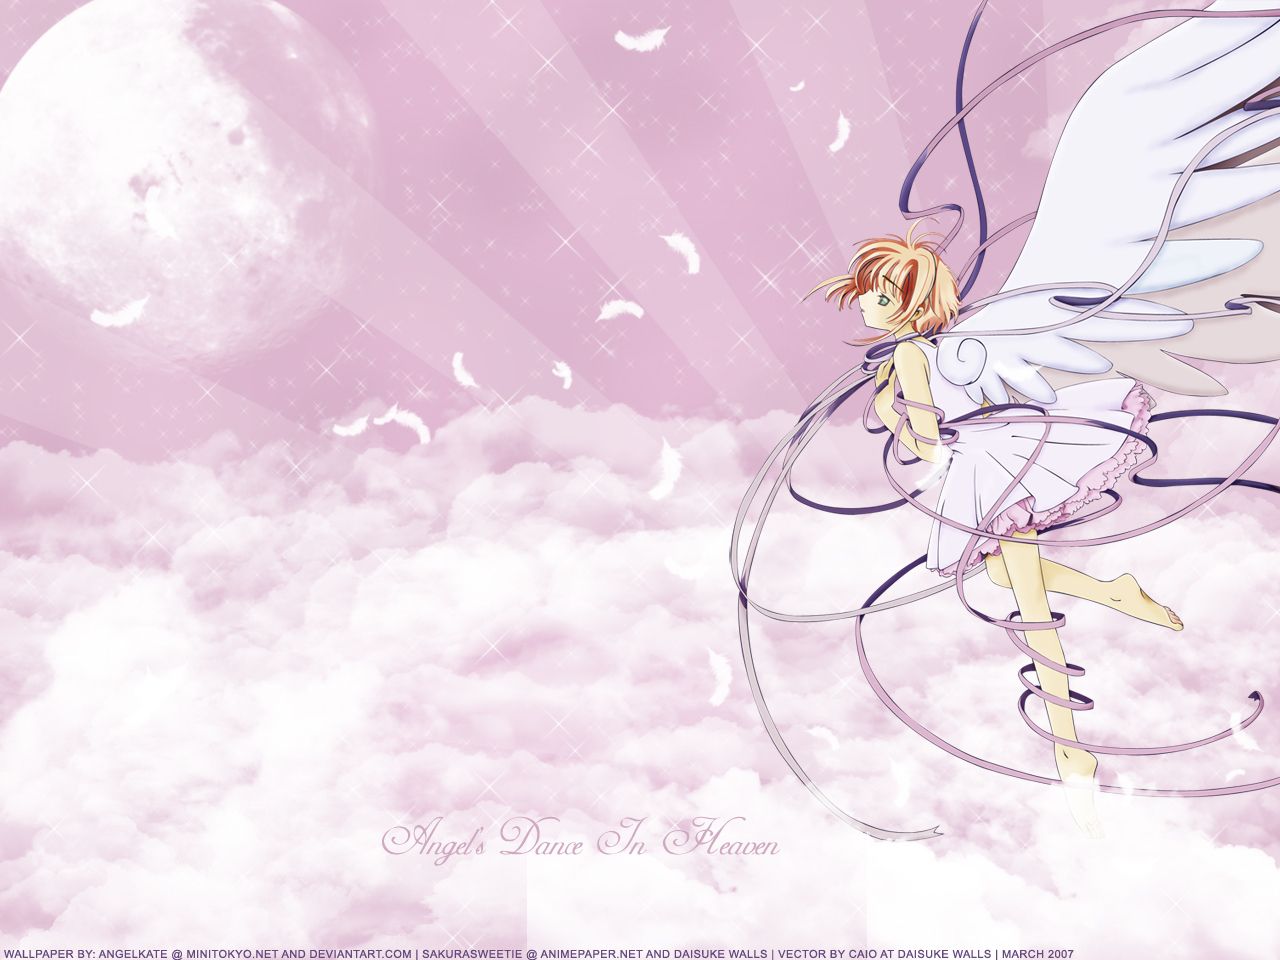 Card Captor Sakura Wallpaper. Cardcaptor Sakura Wallpaper, Captor Wallpaper and Cardcaptor Sakura Desktop Background